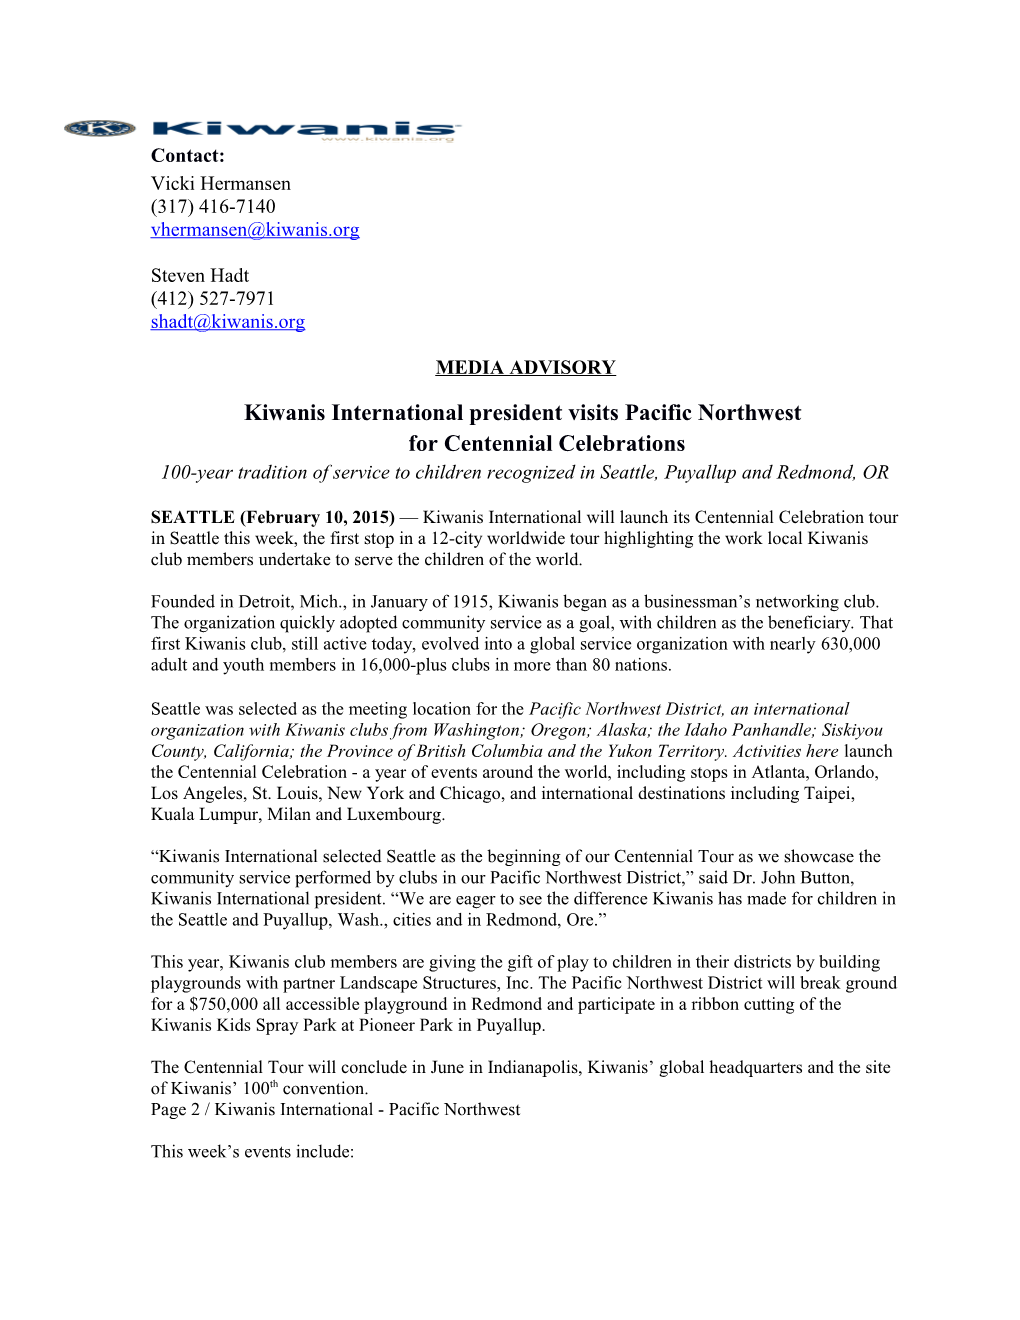 Kiwanis International President Visits Pacific Northwest for Centennial Celebrations